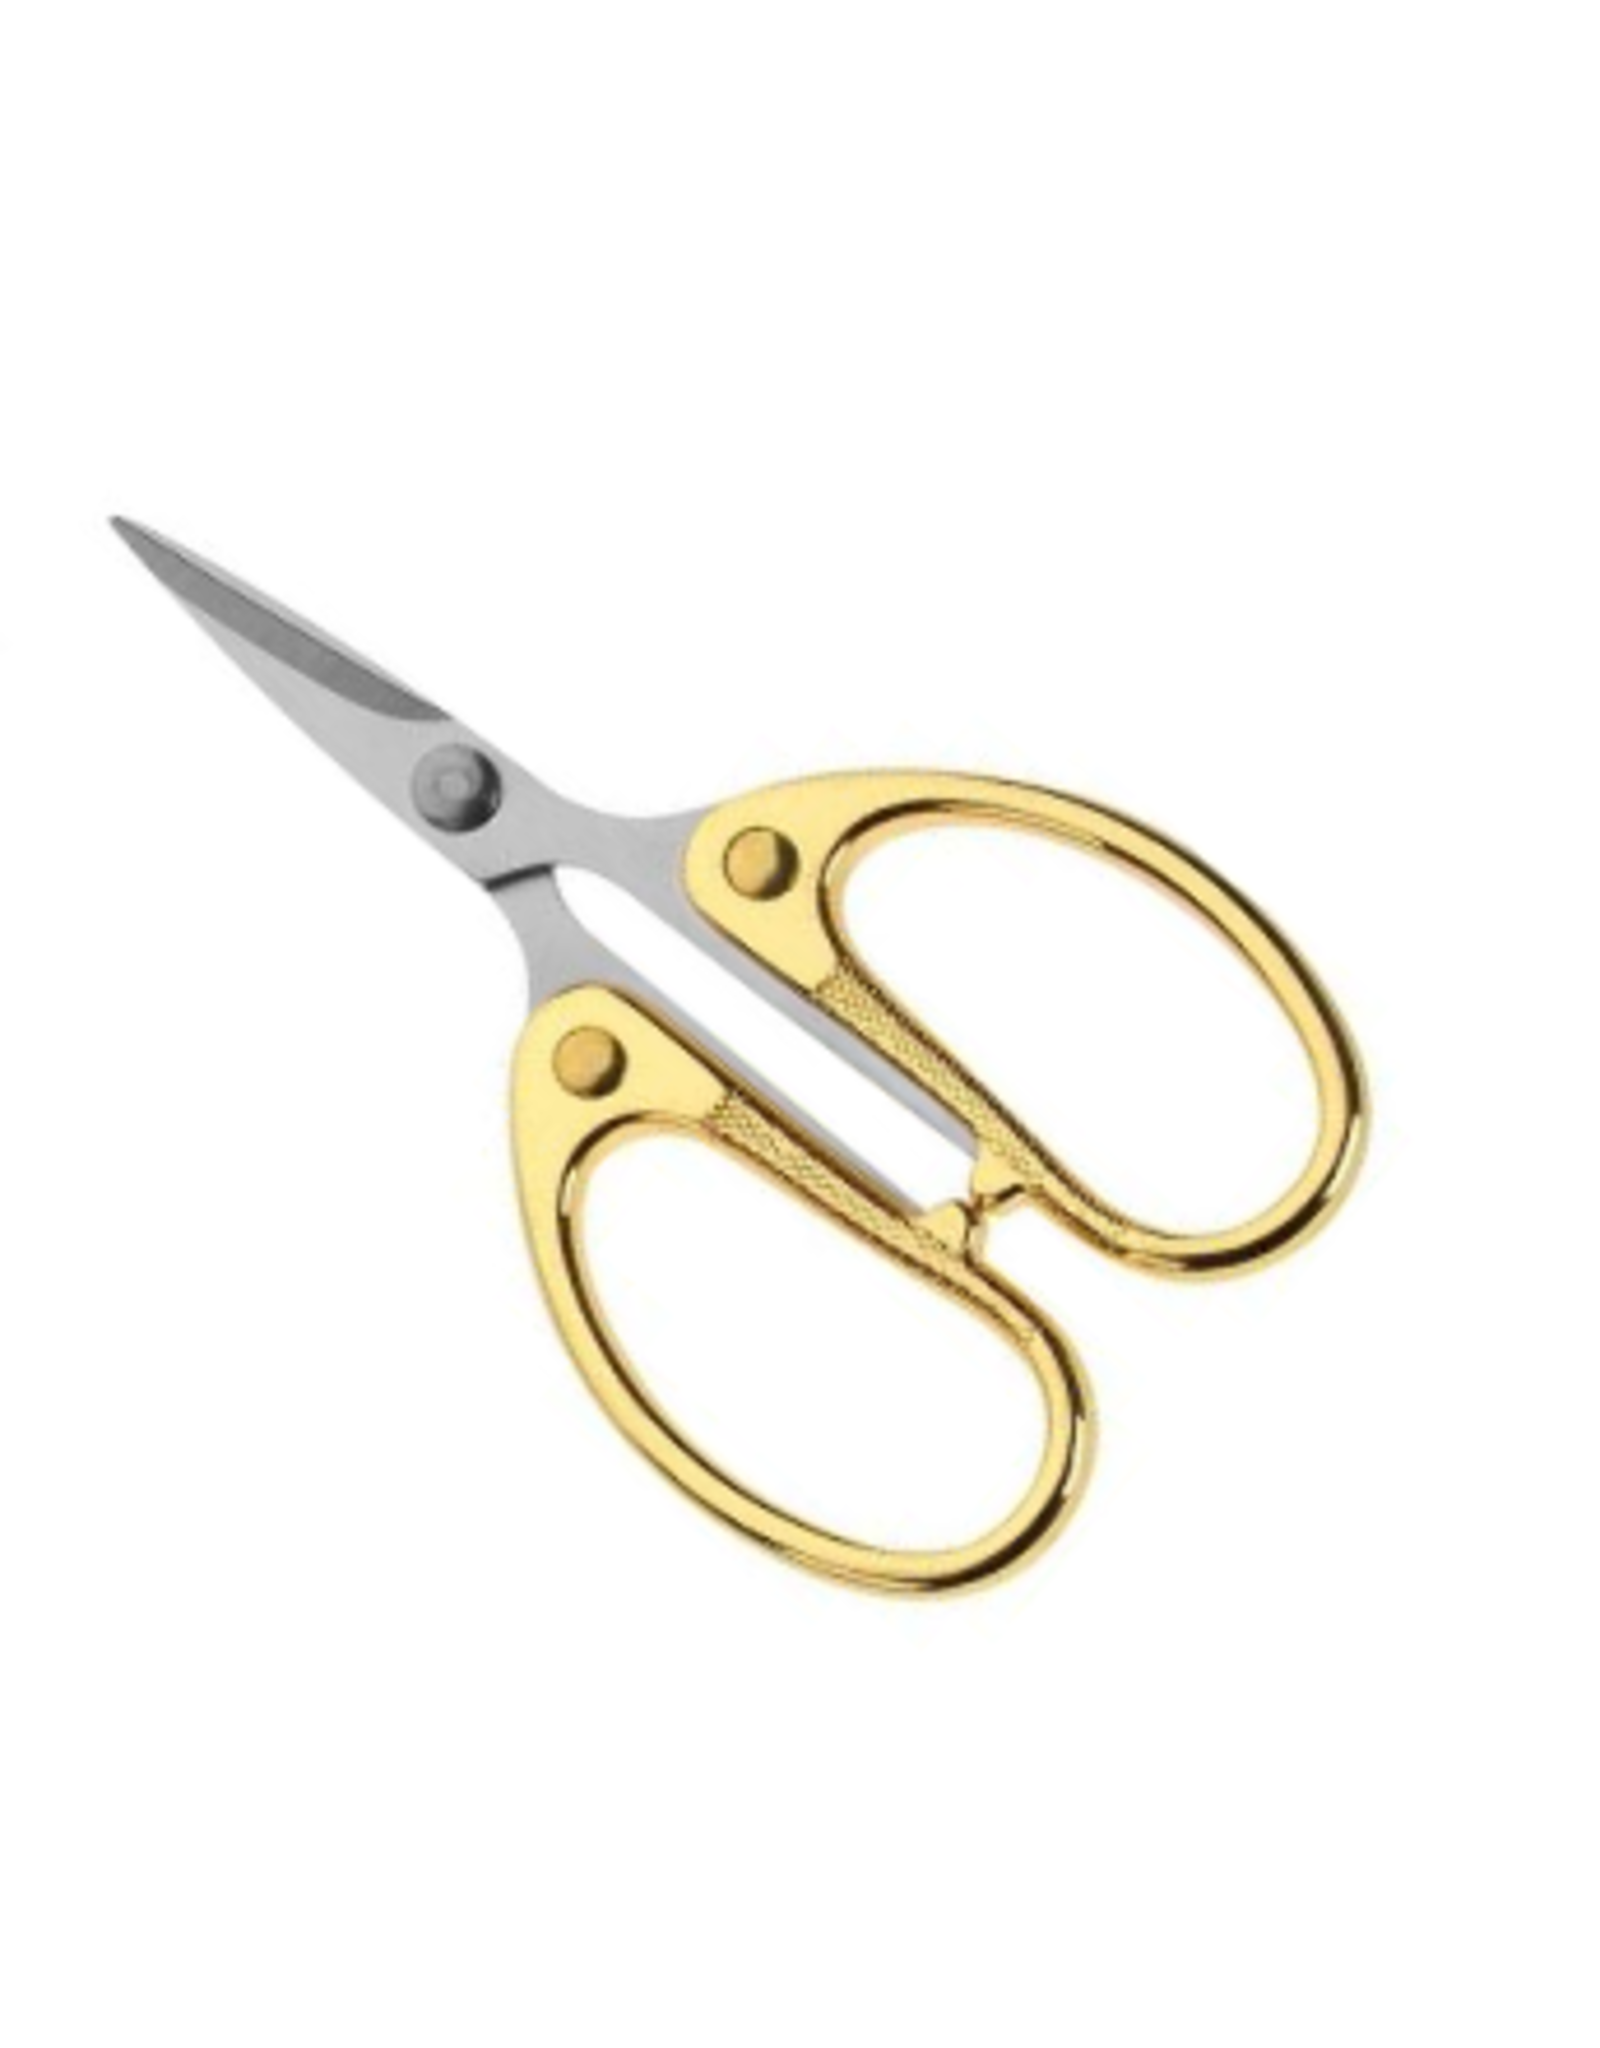 4.5" Scissors Large Finger Rings Stainless Steel Blades Multi Colour Handle